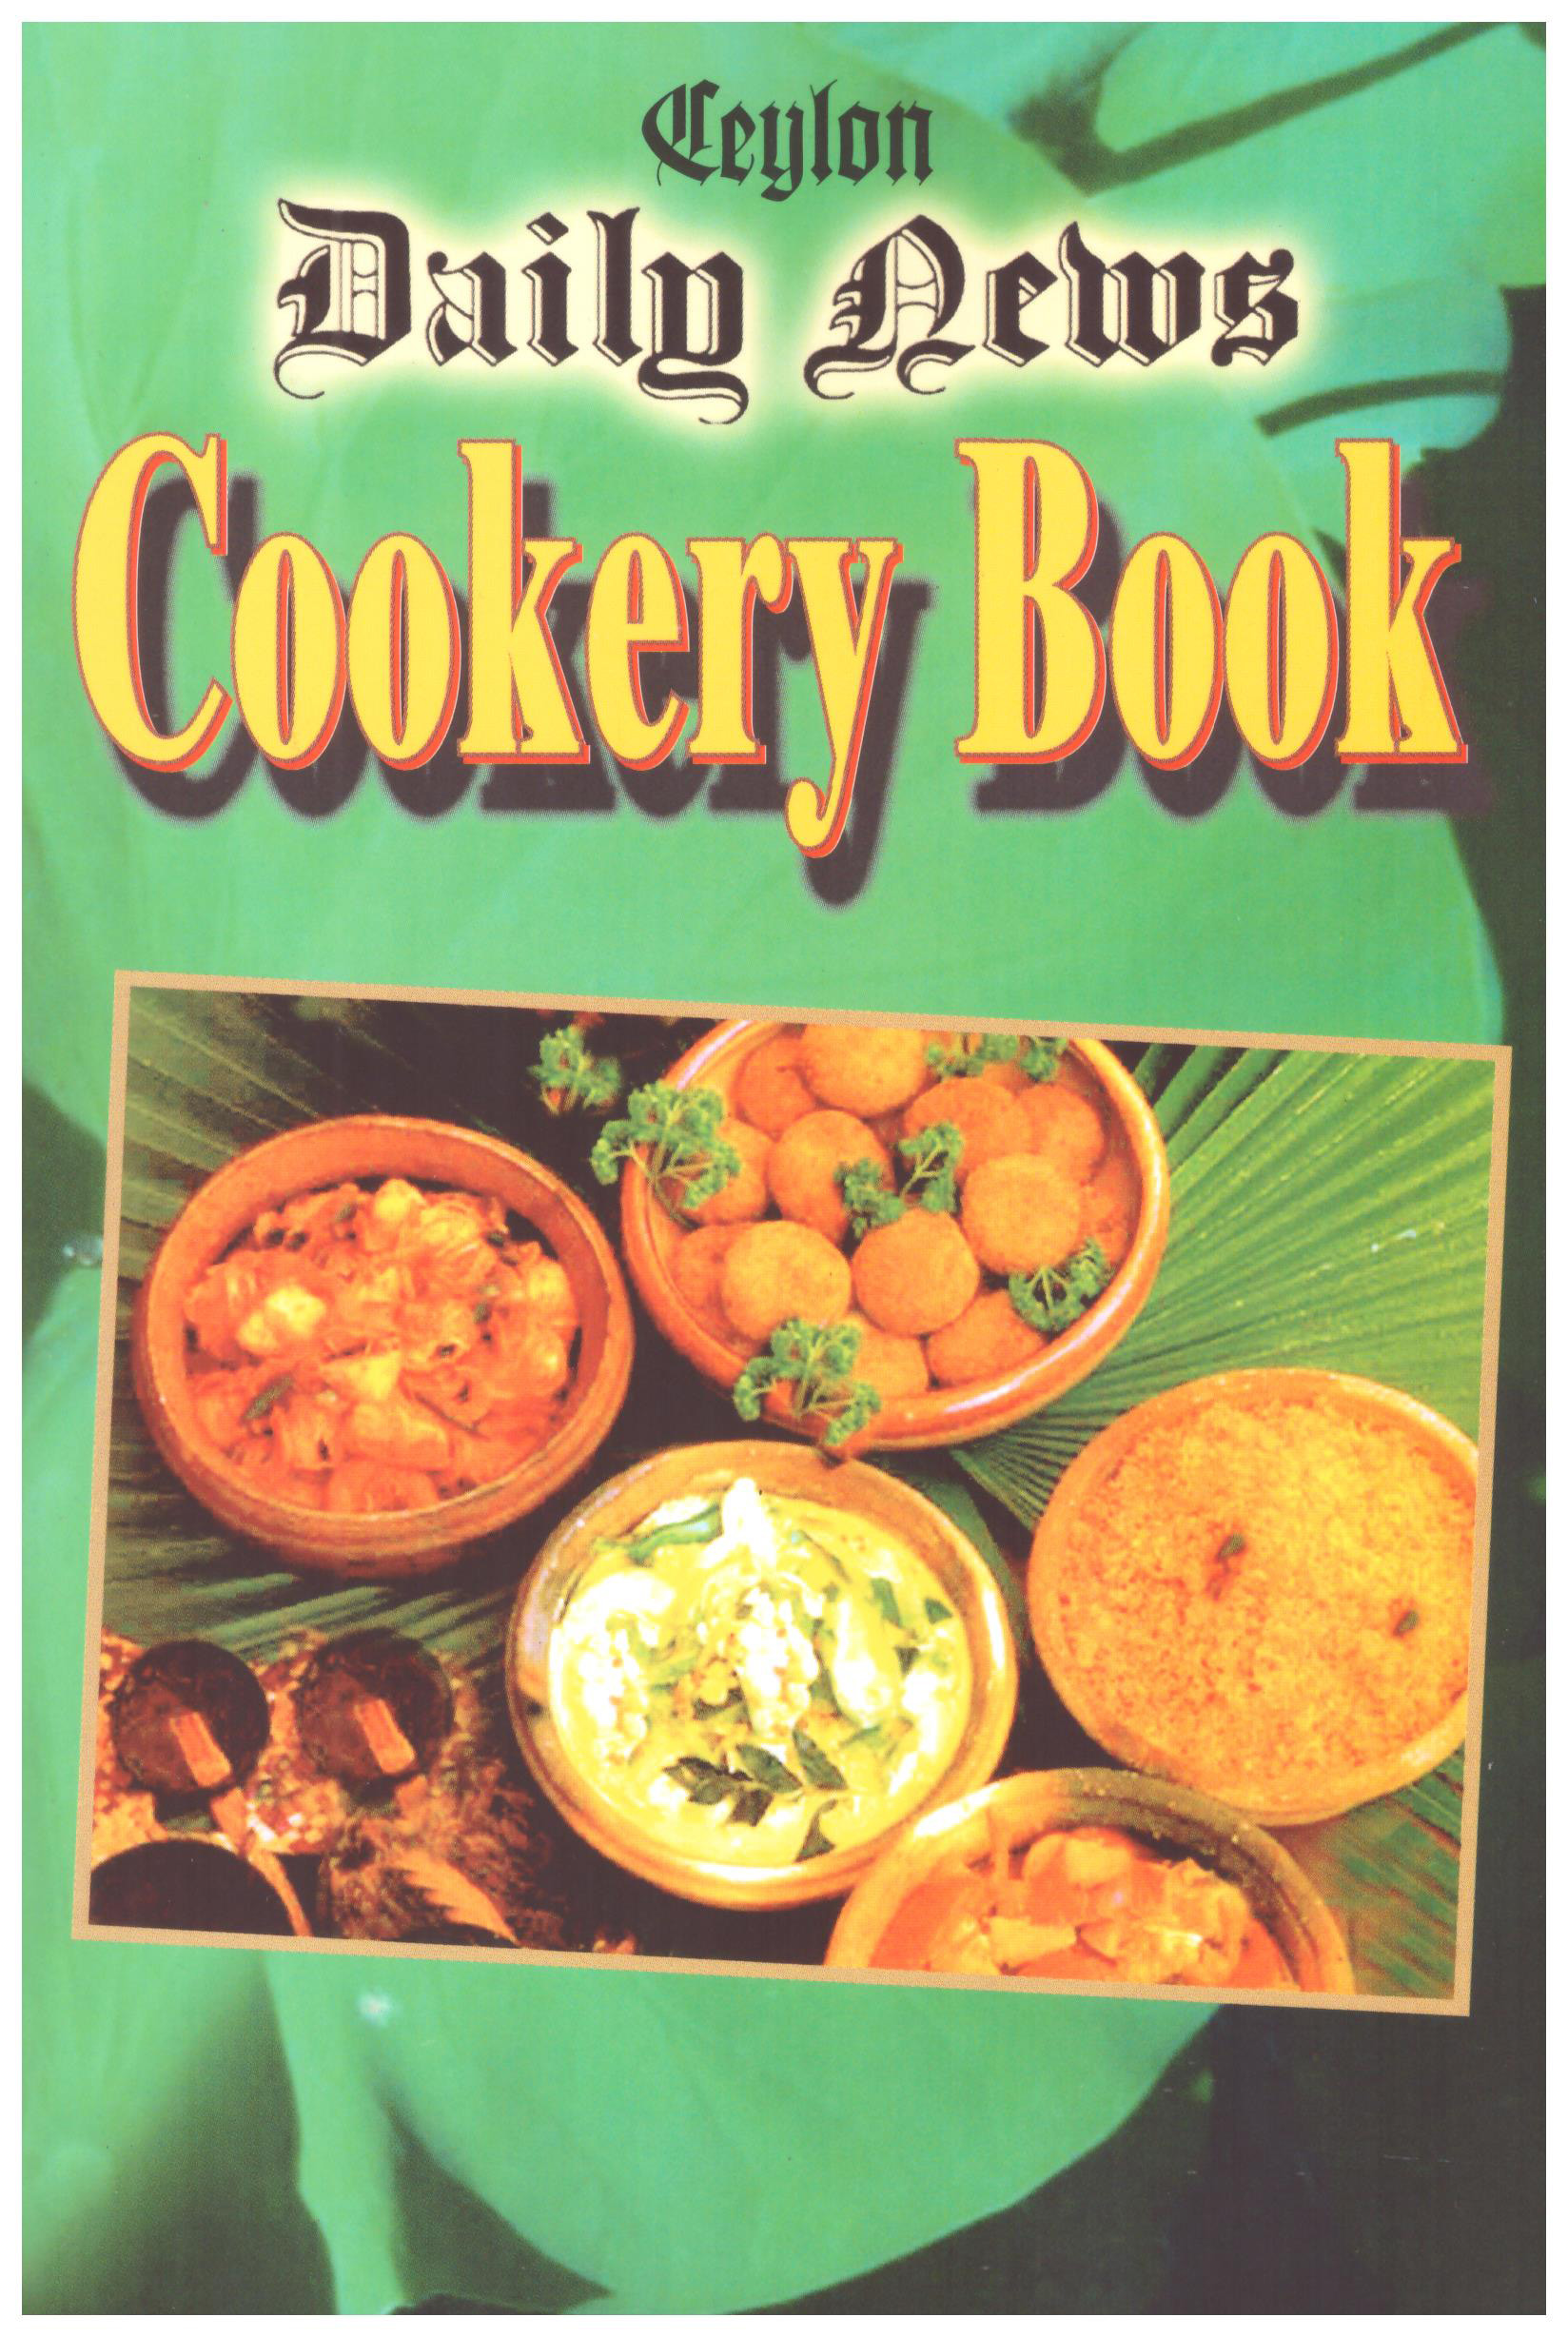 Ceylon Daily News Cookery Book